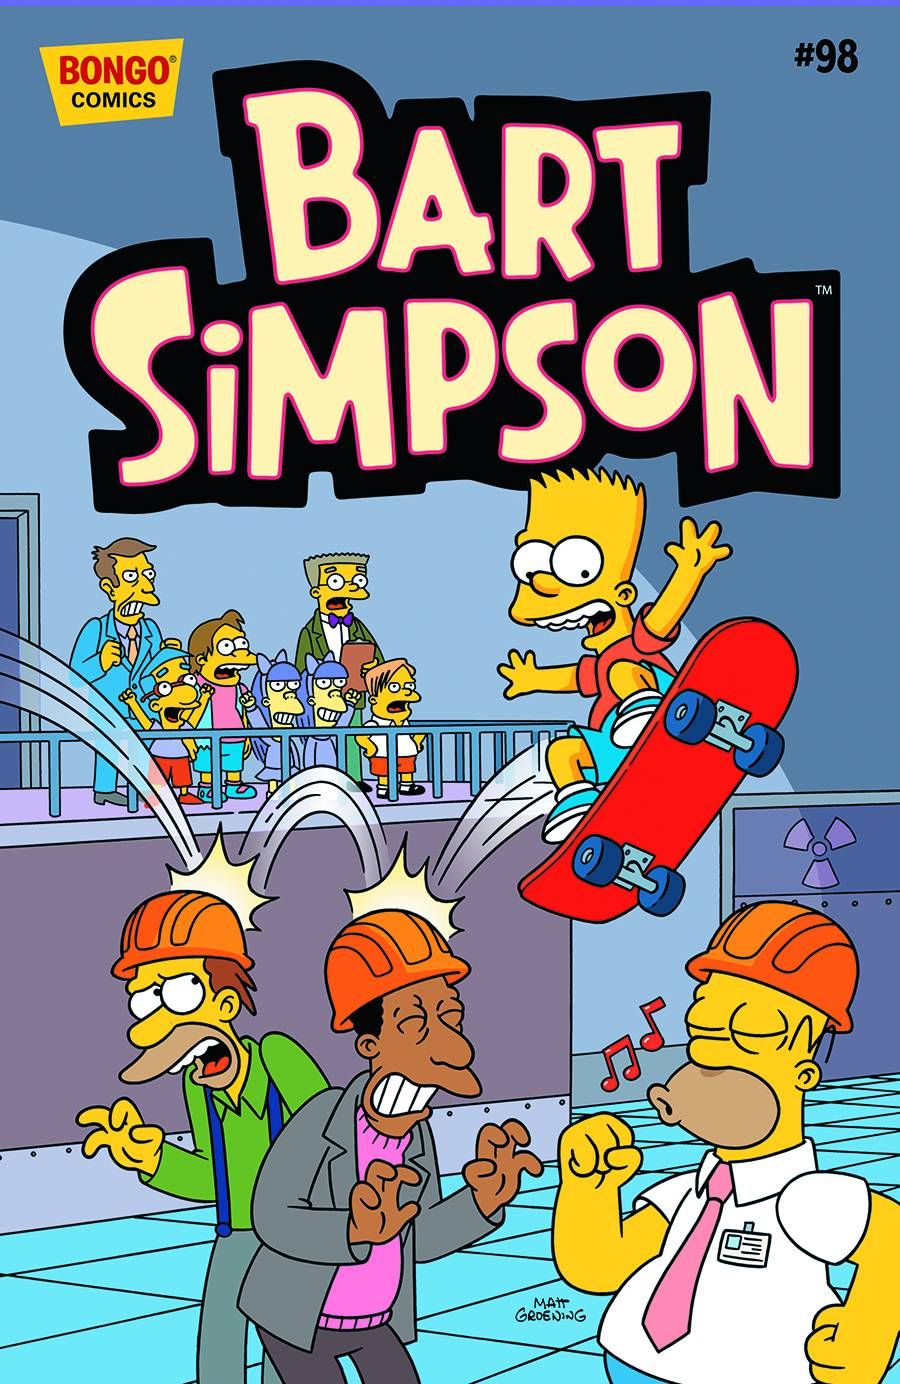 Simpsons Comics Presents Bart Simpson #98 Comic